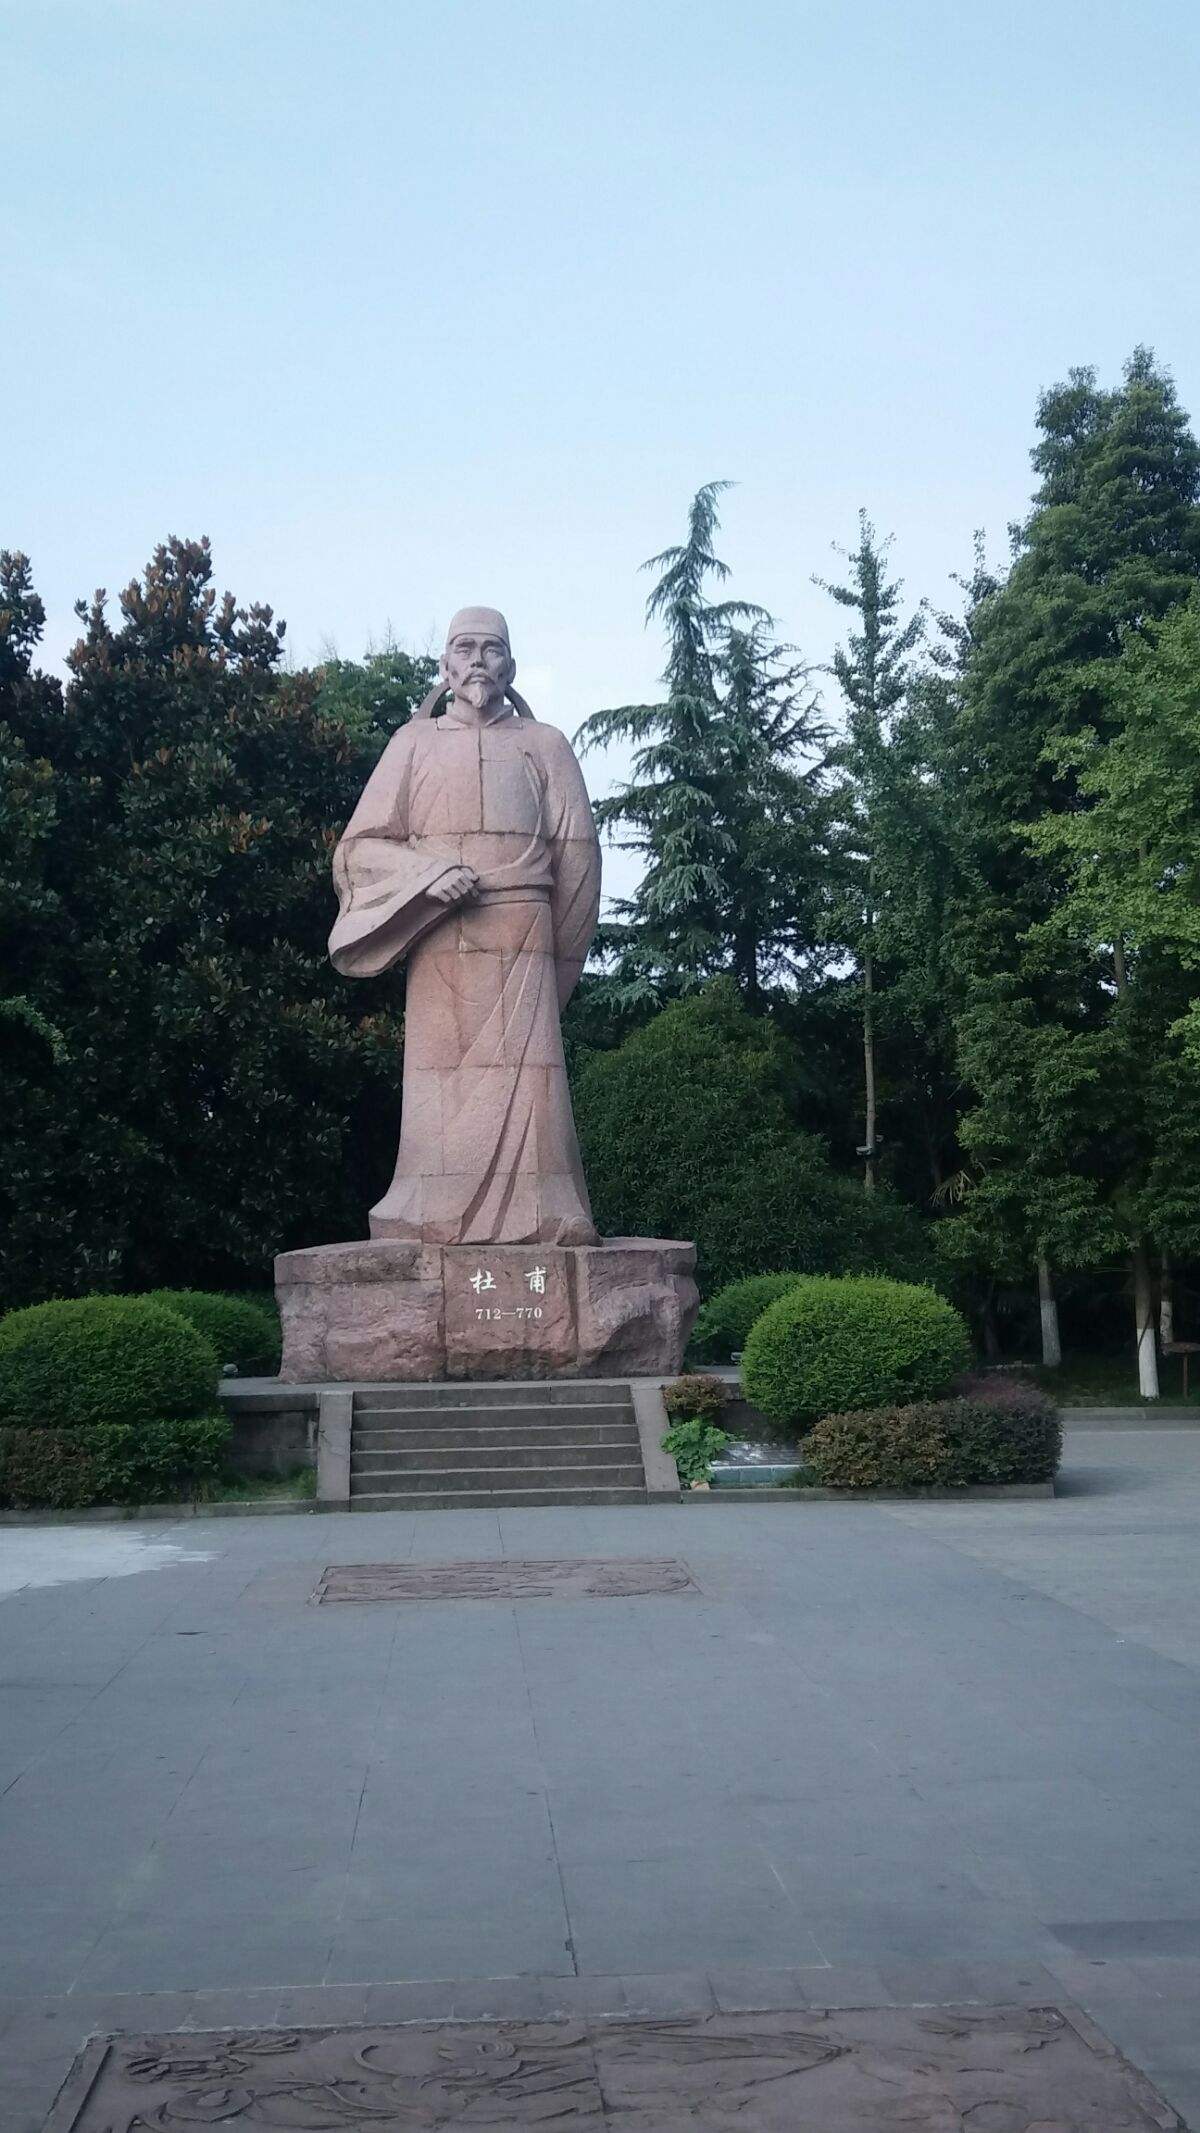 The statue of Du Fu 杜甫塑像